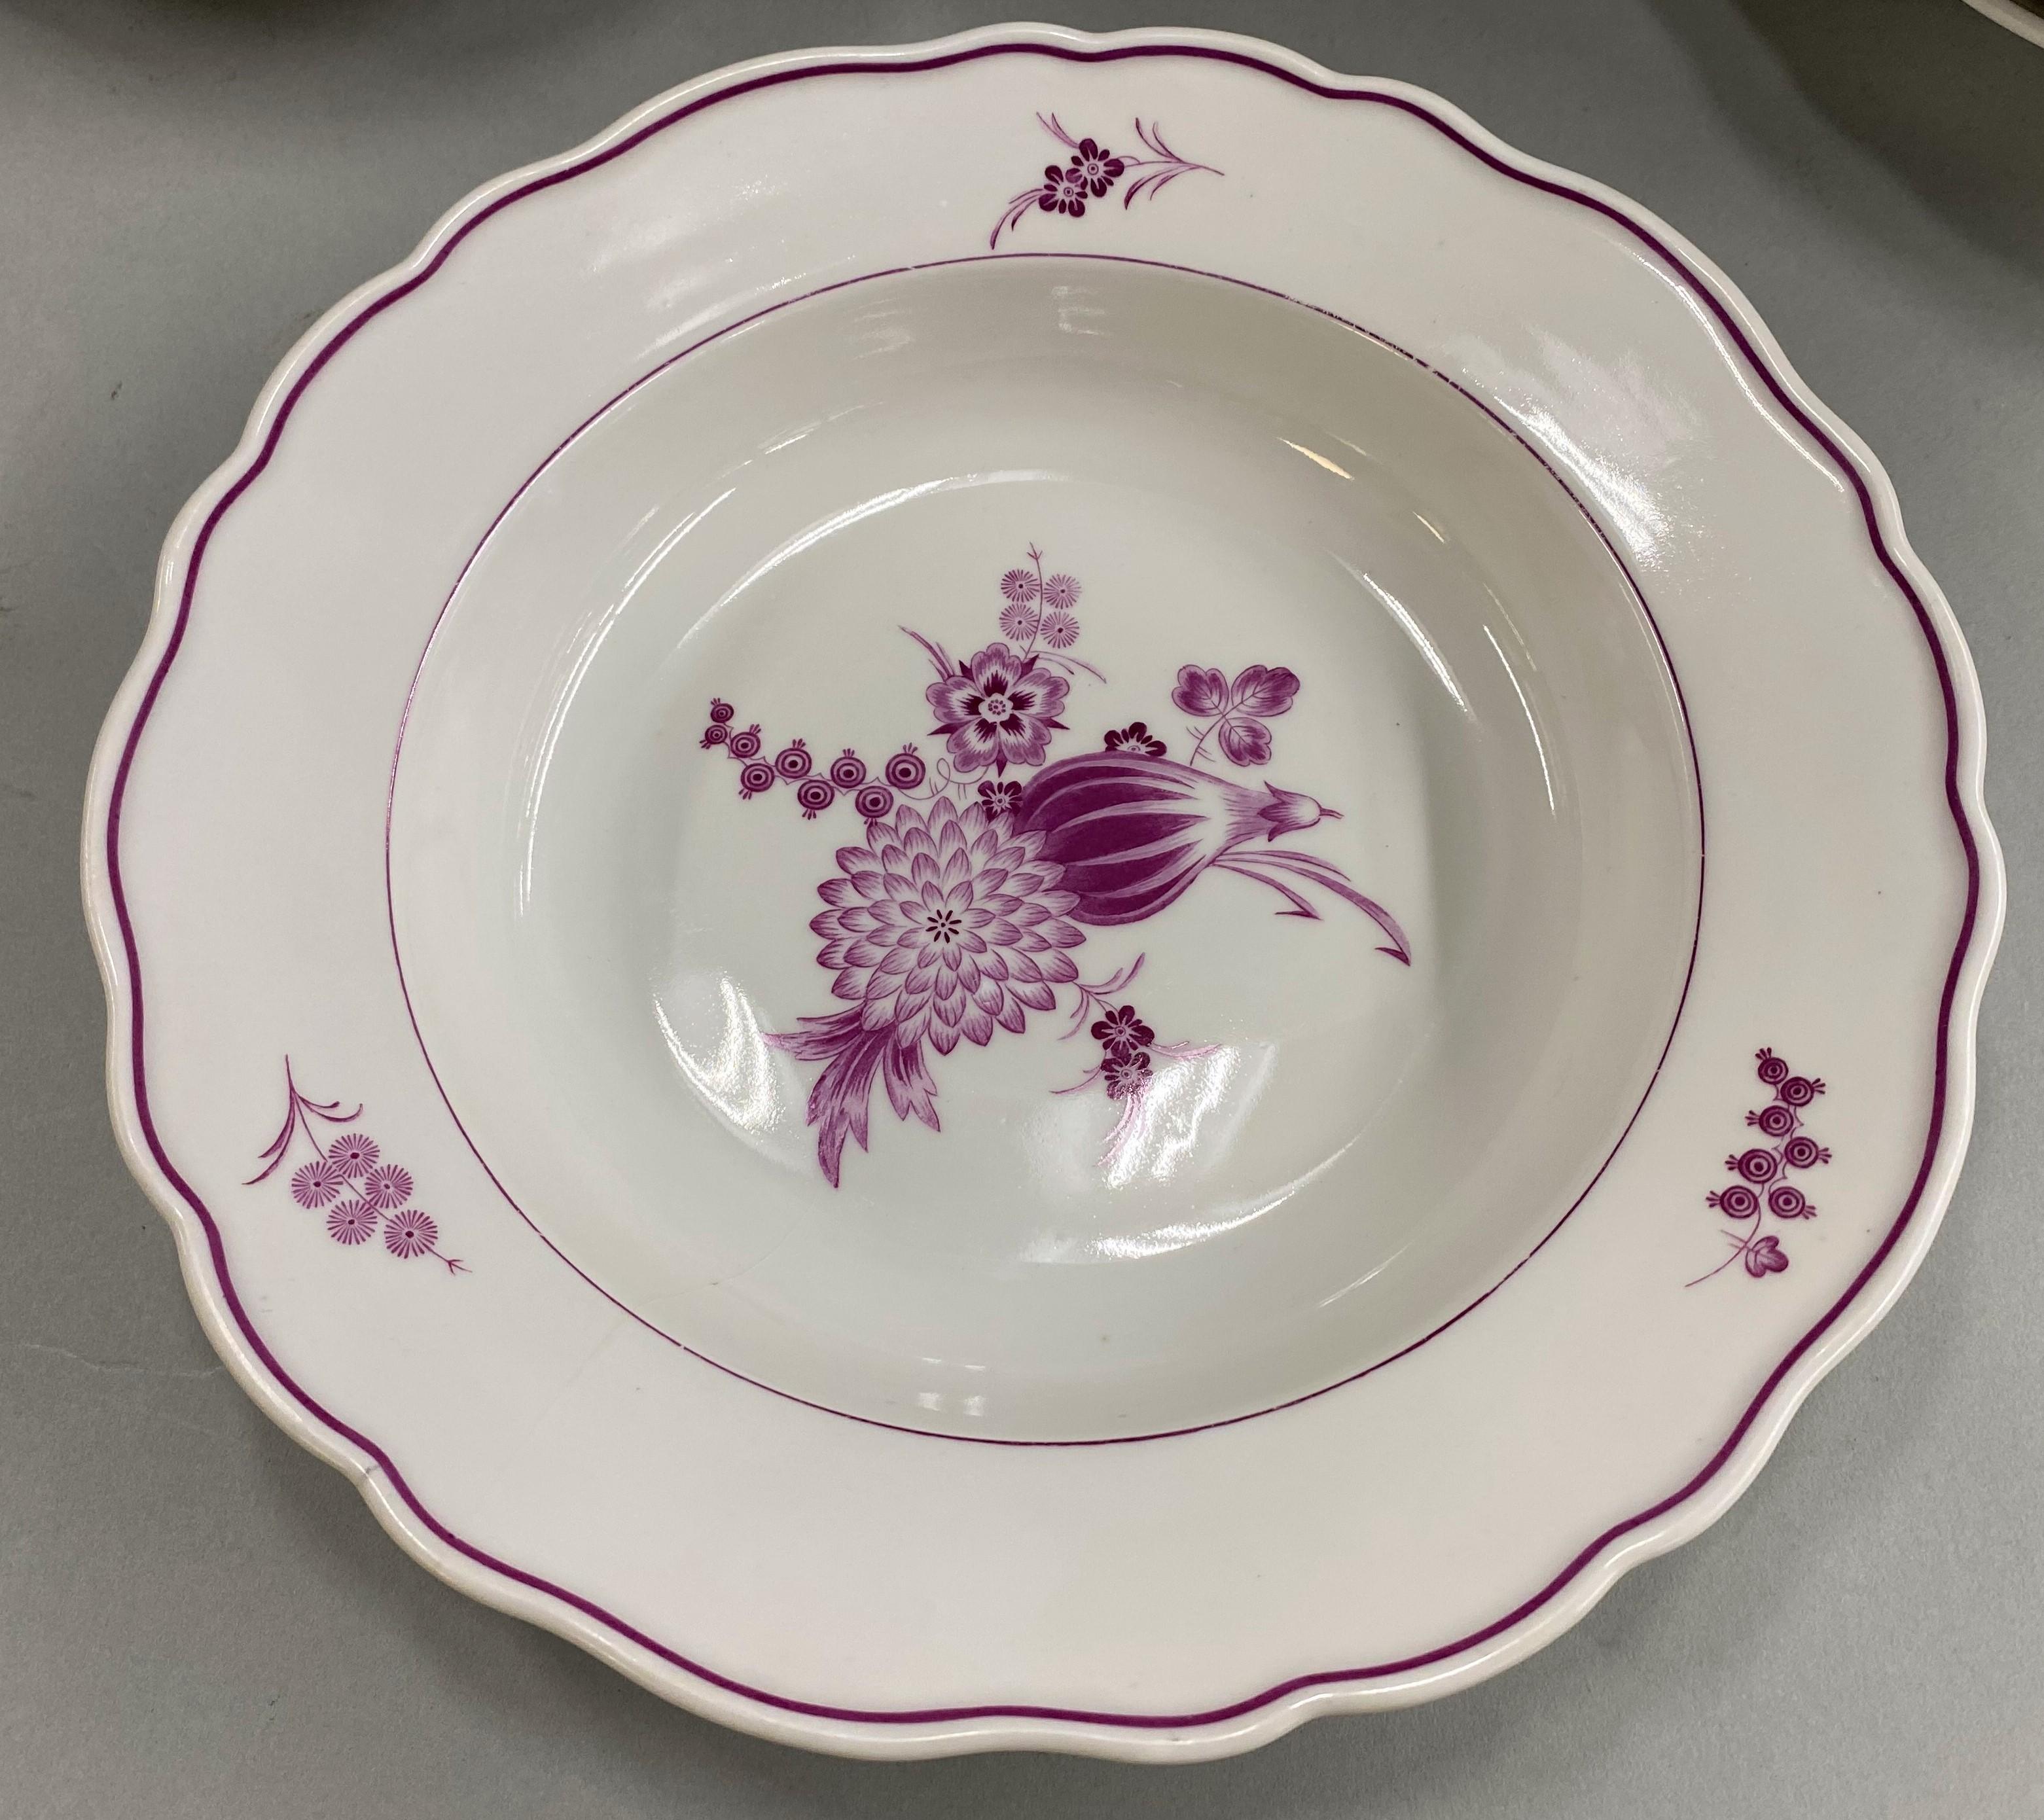 19th Century 49-Piece Meissen Porcelain Dinner Service in Rare Puce/Purple Color For Sale